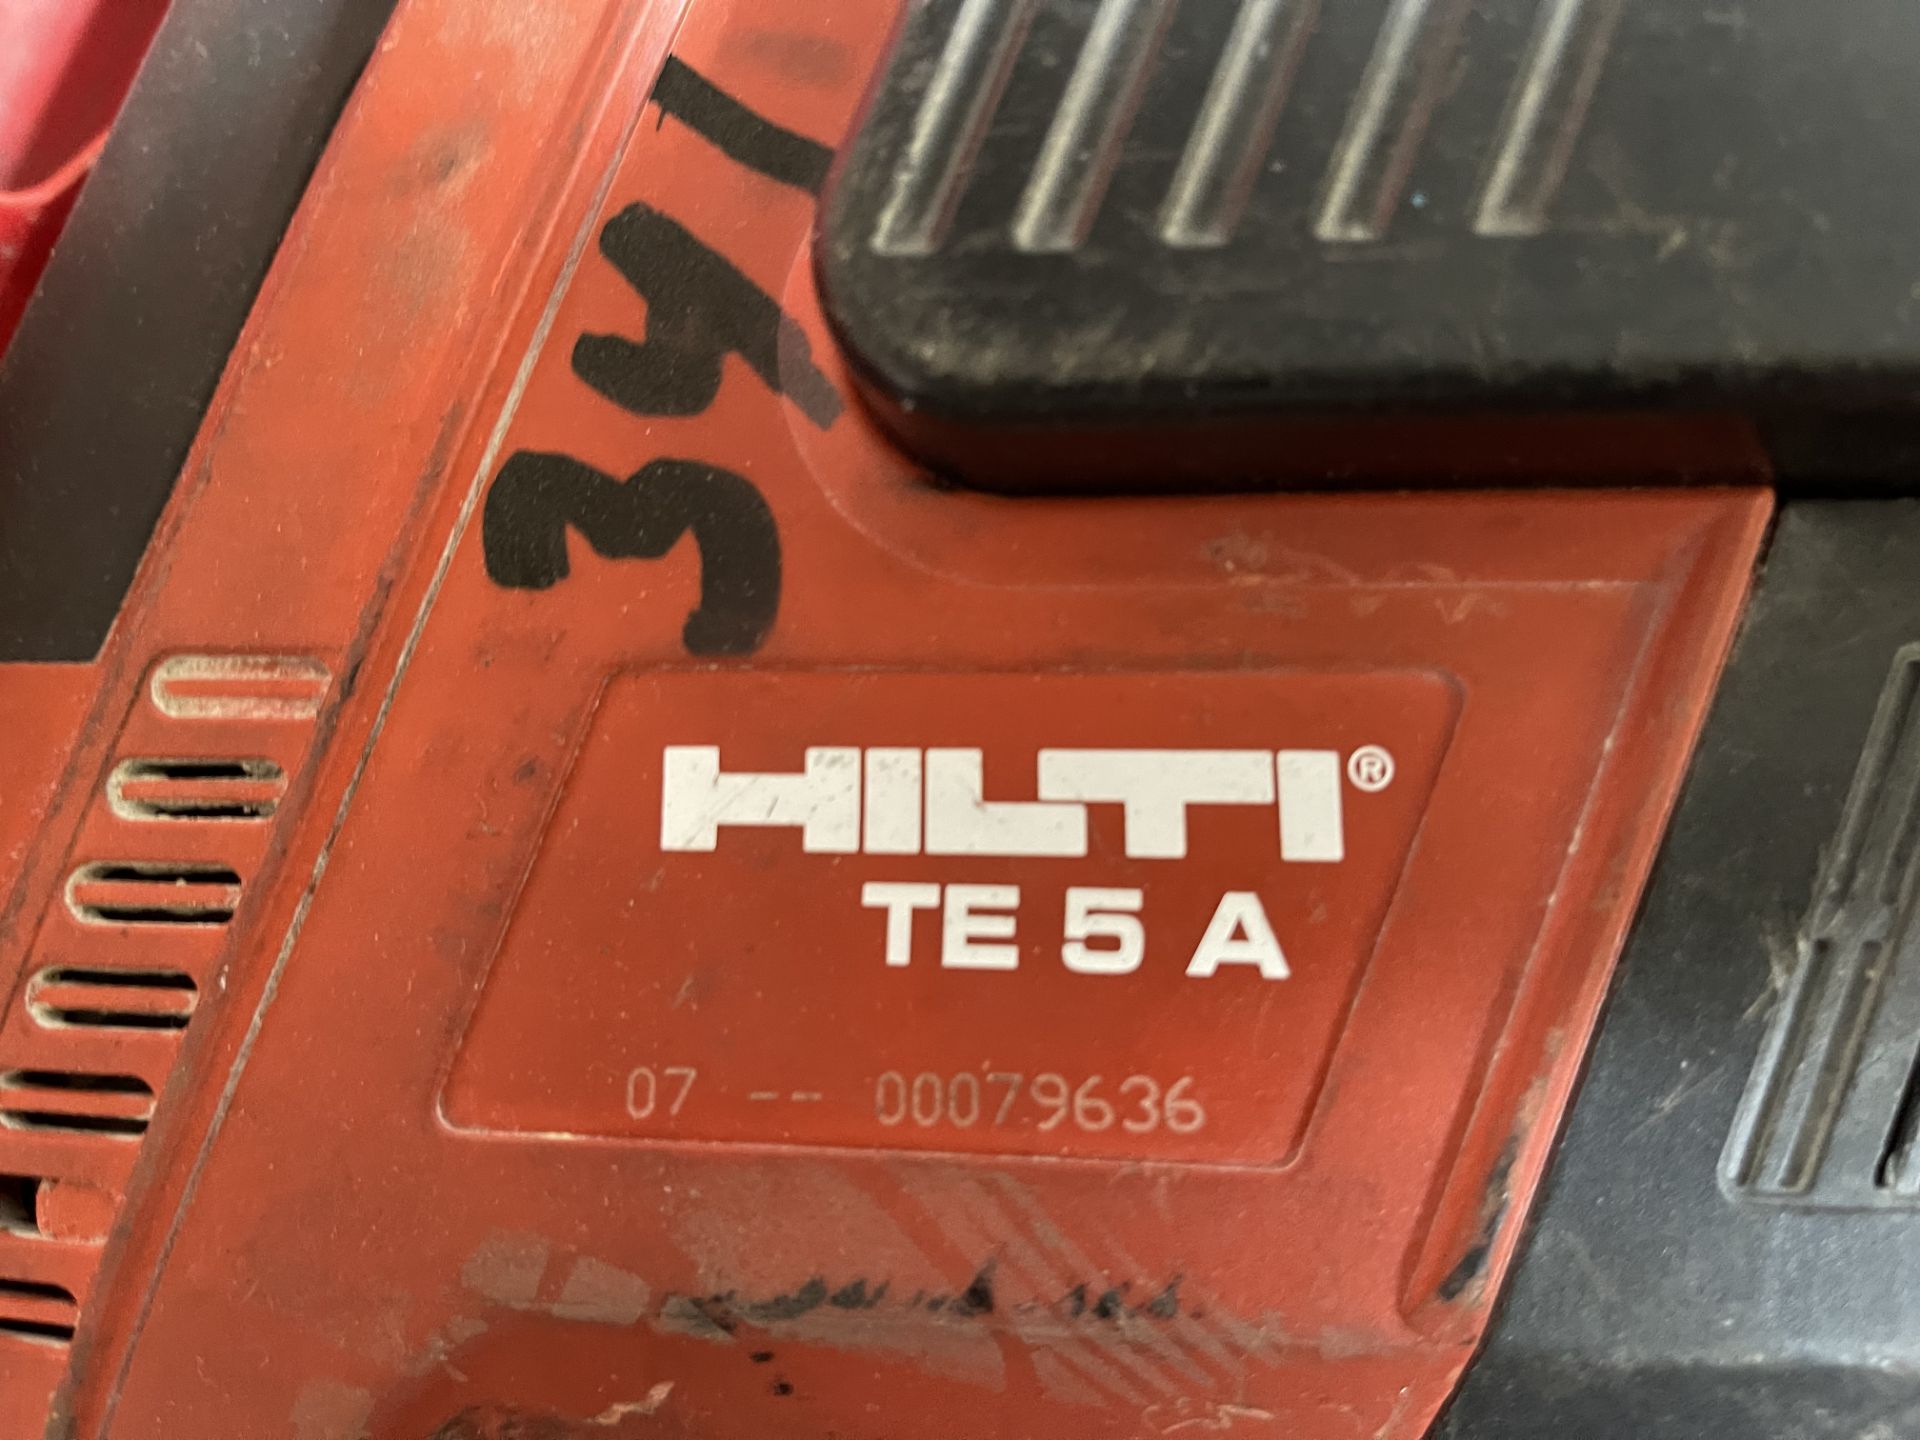 Hilti TE 5A cordless hammer drill - Image 2 of 2